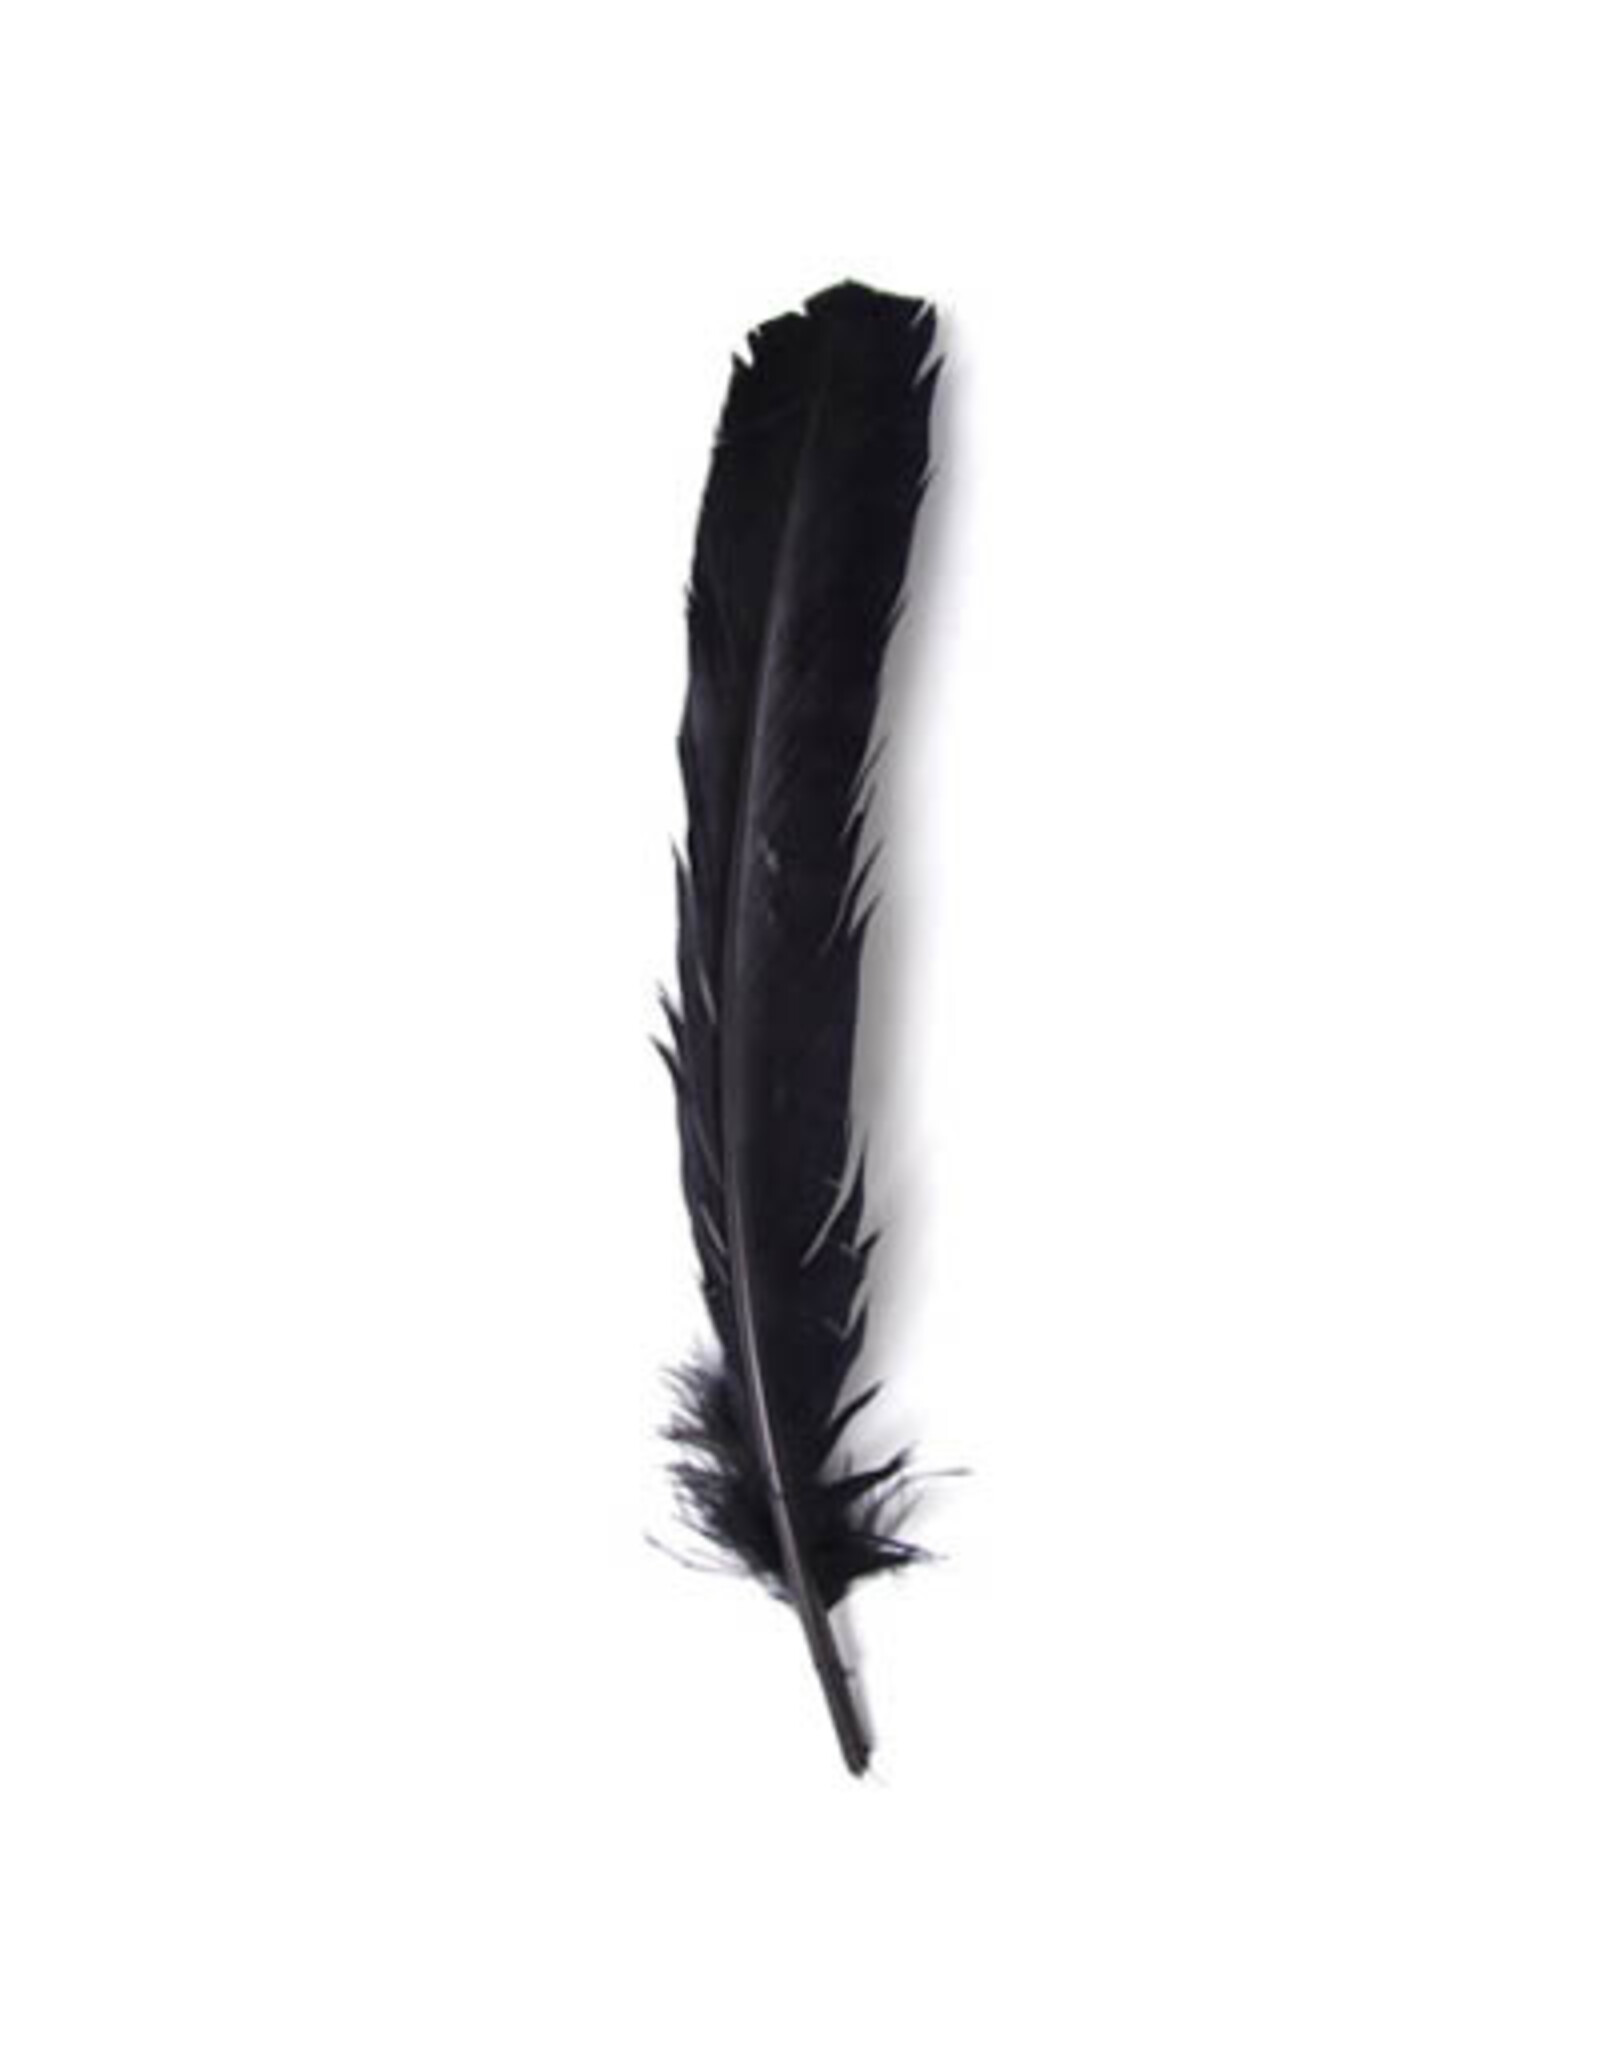 Feather Turkey Quill  12"  x6